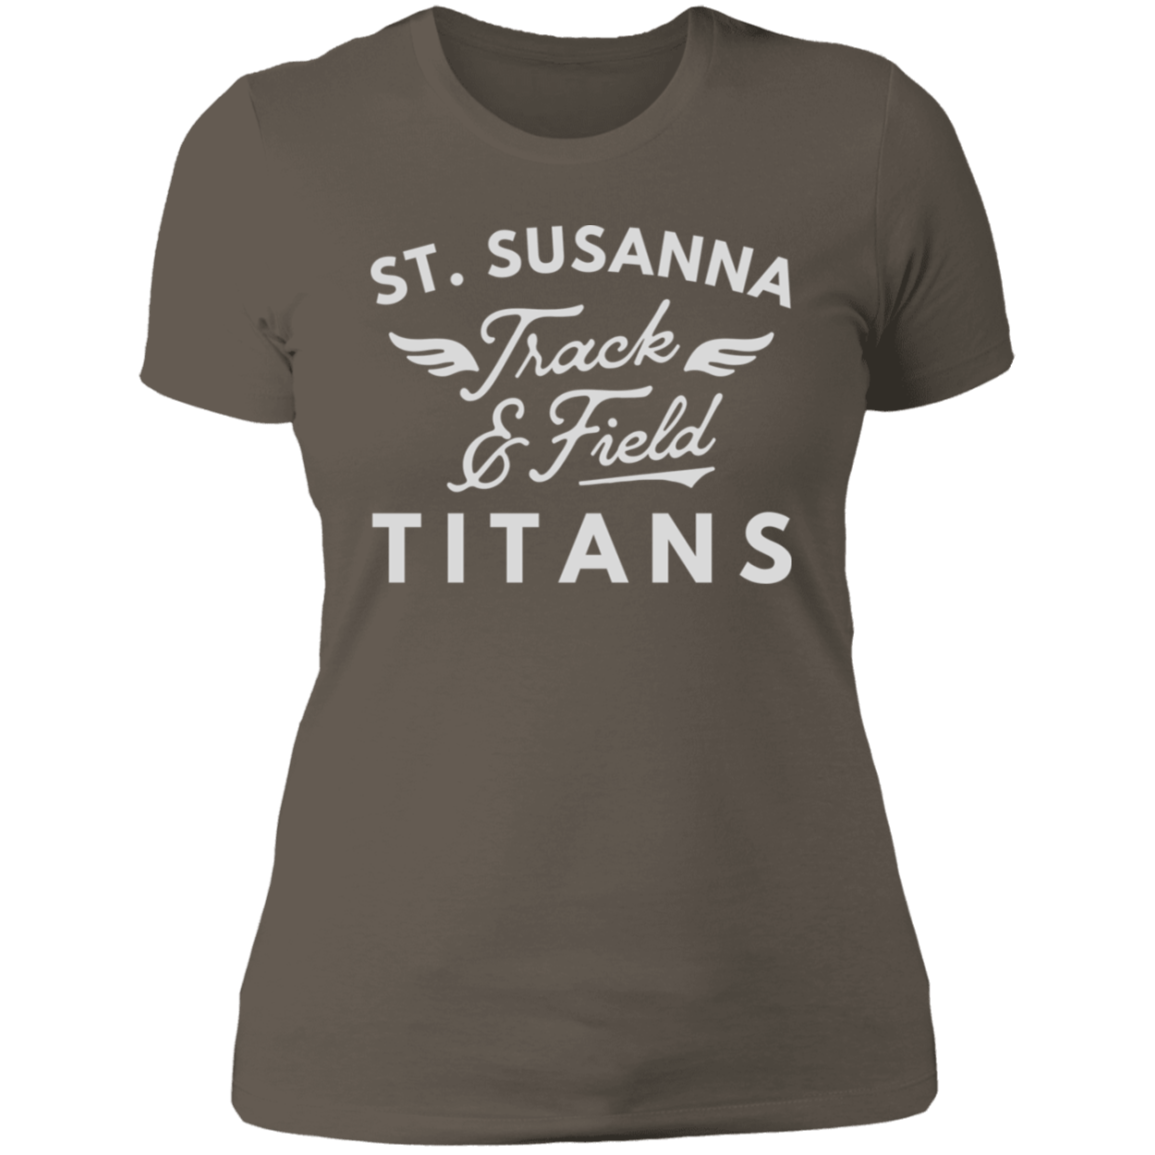 St. Susanna Titans Track and Field Wings Ladies' Boyfriend T-Shirt